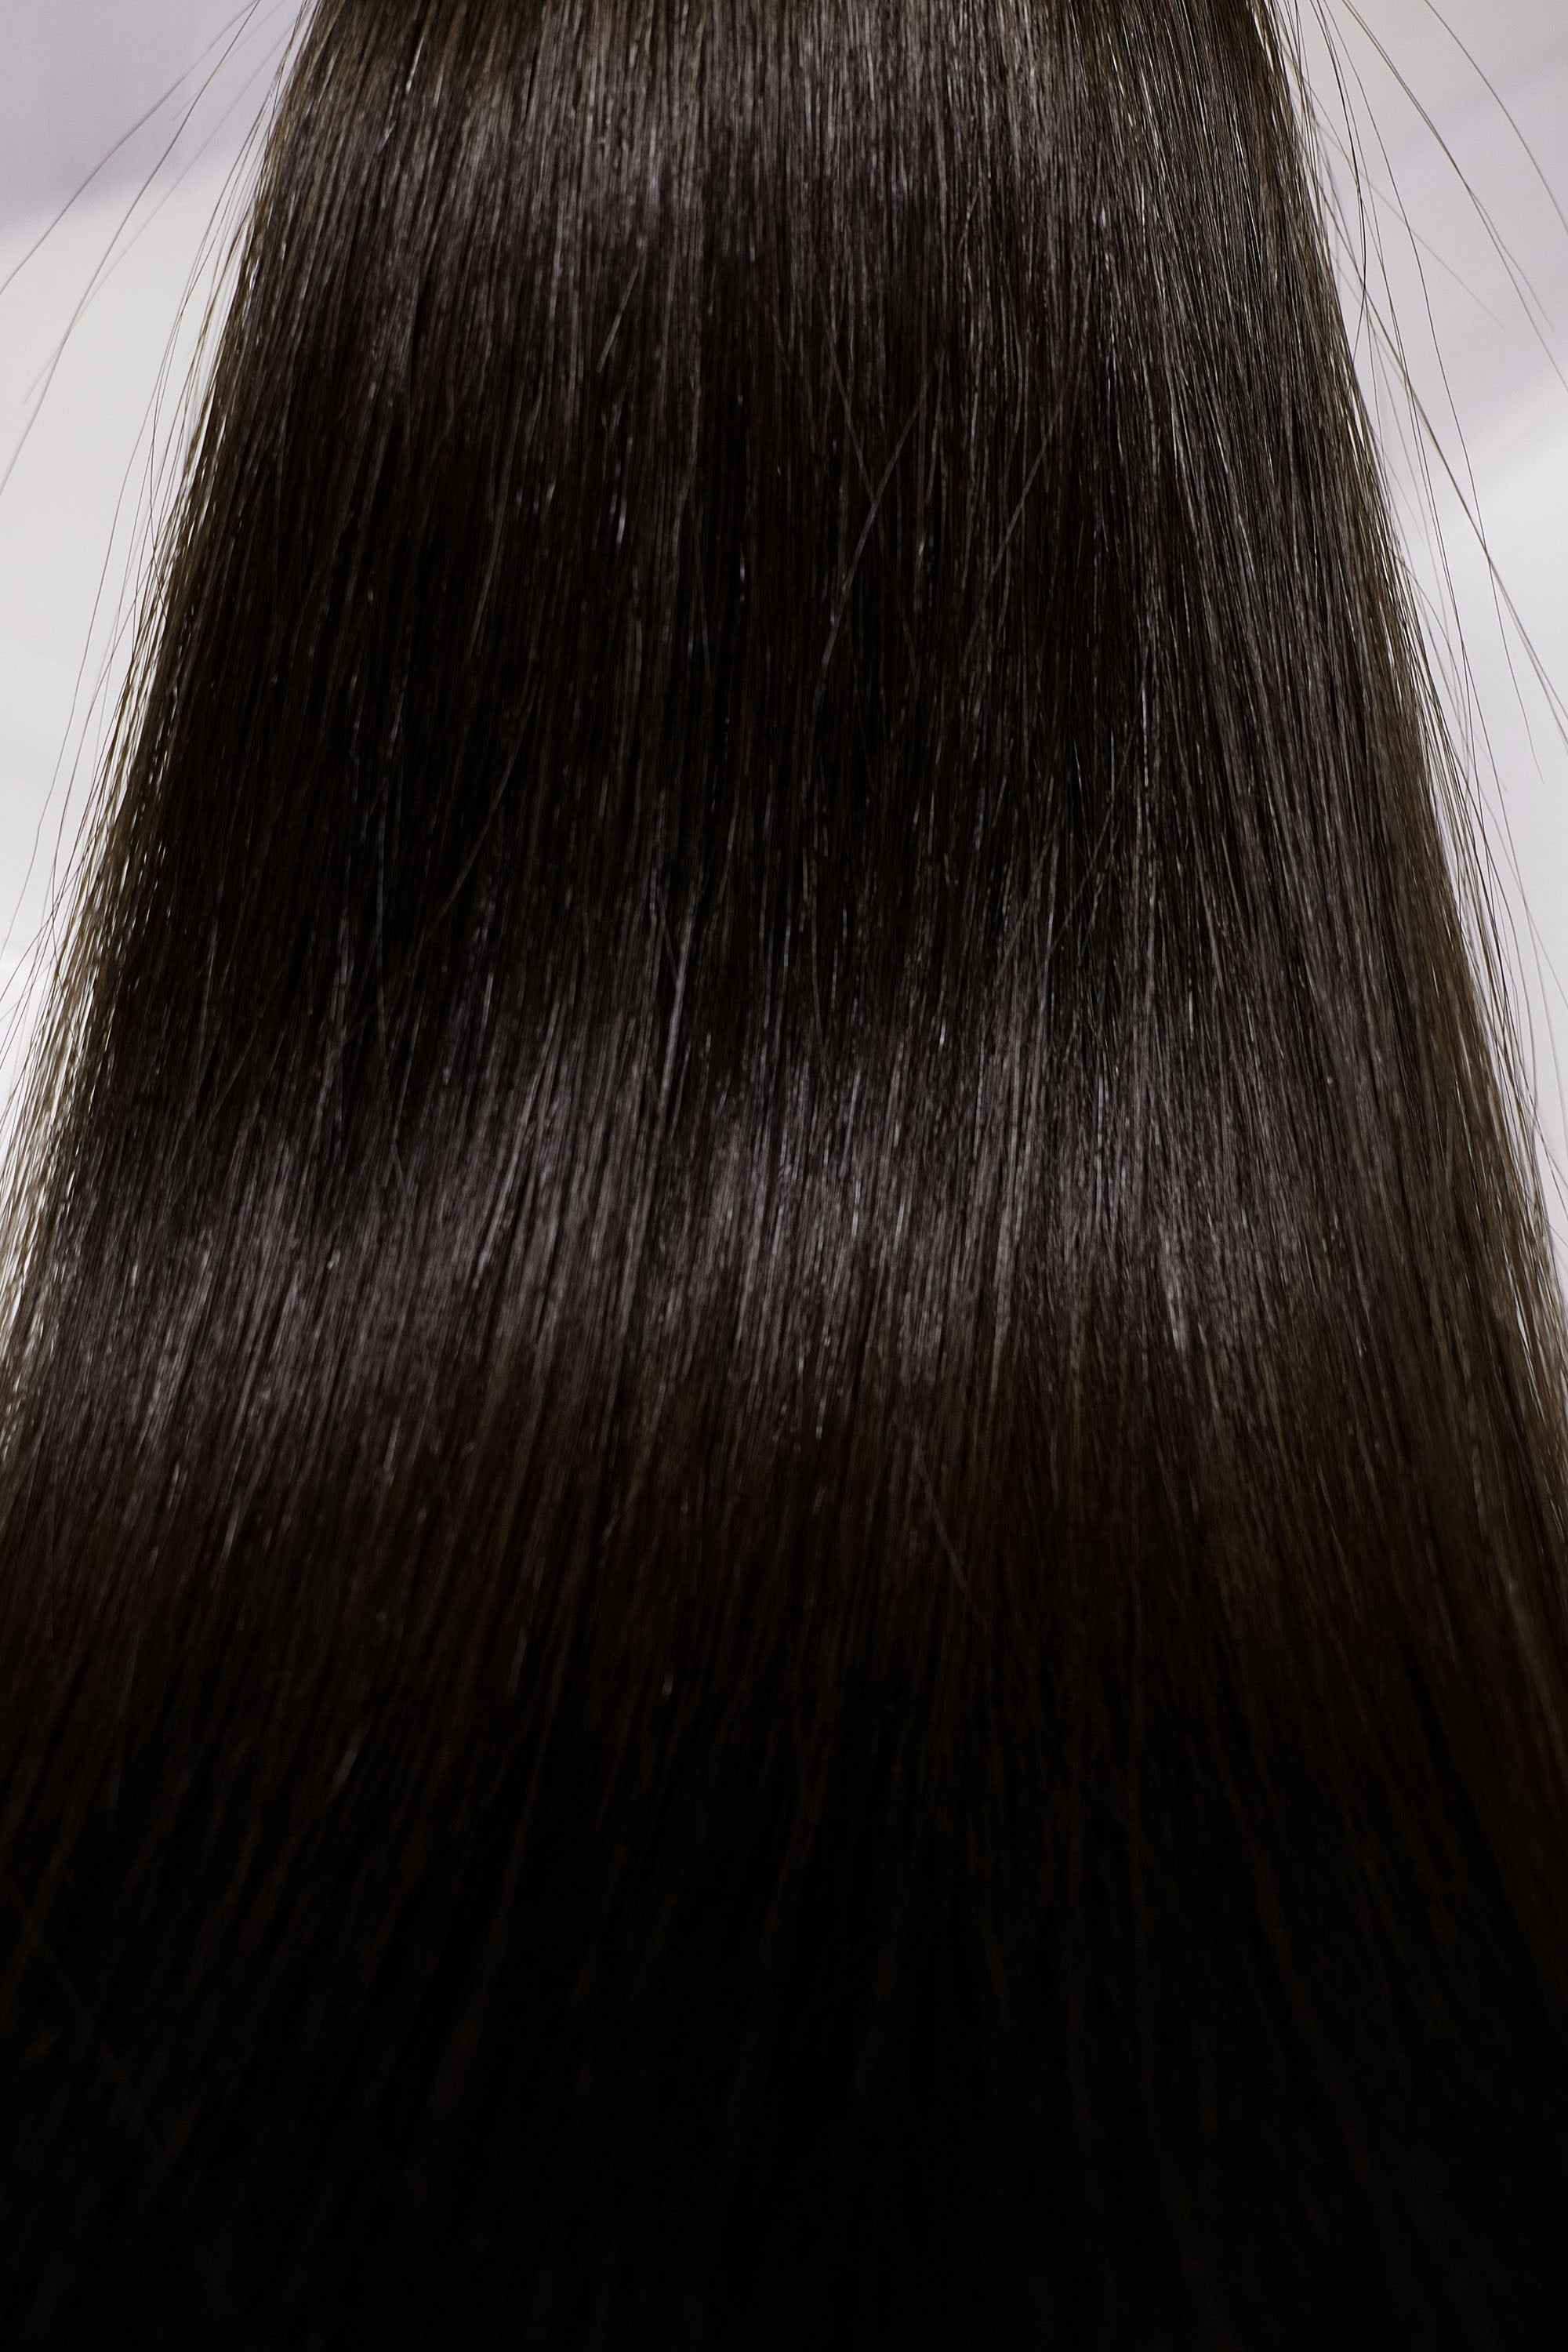 Behair professional Keratin Tip "Premium" 26" (65cm) Natural Straight Natural Black #1B - 25g (1g each pcs) hair extensions